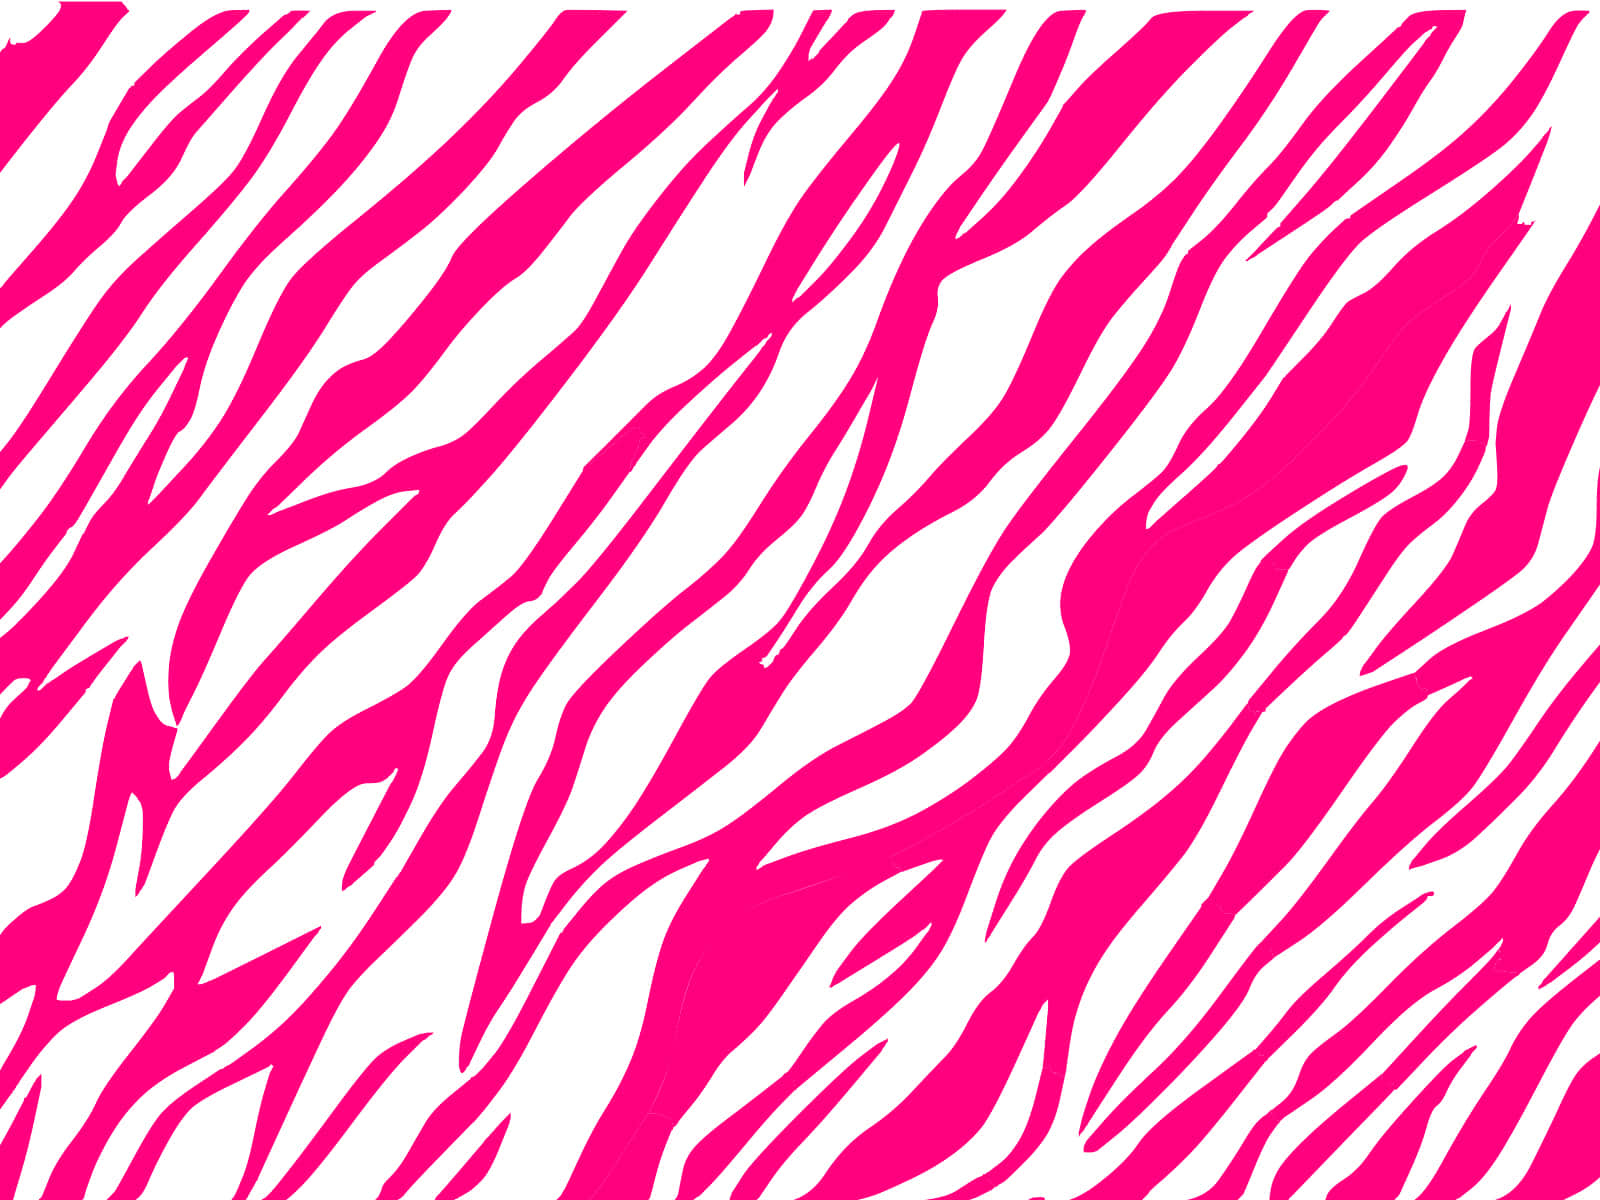 A Pink And White Zebra Print Pattern Background